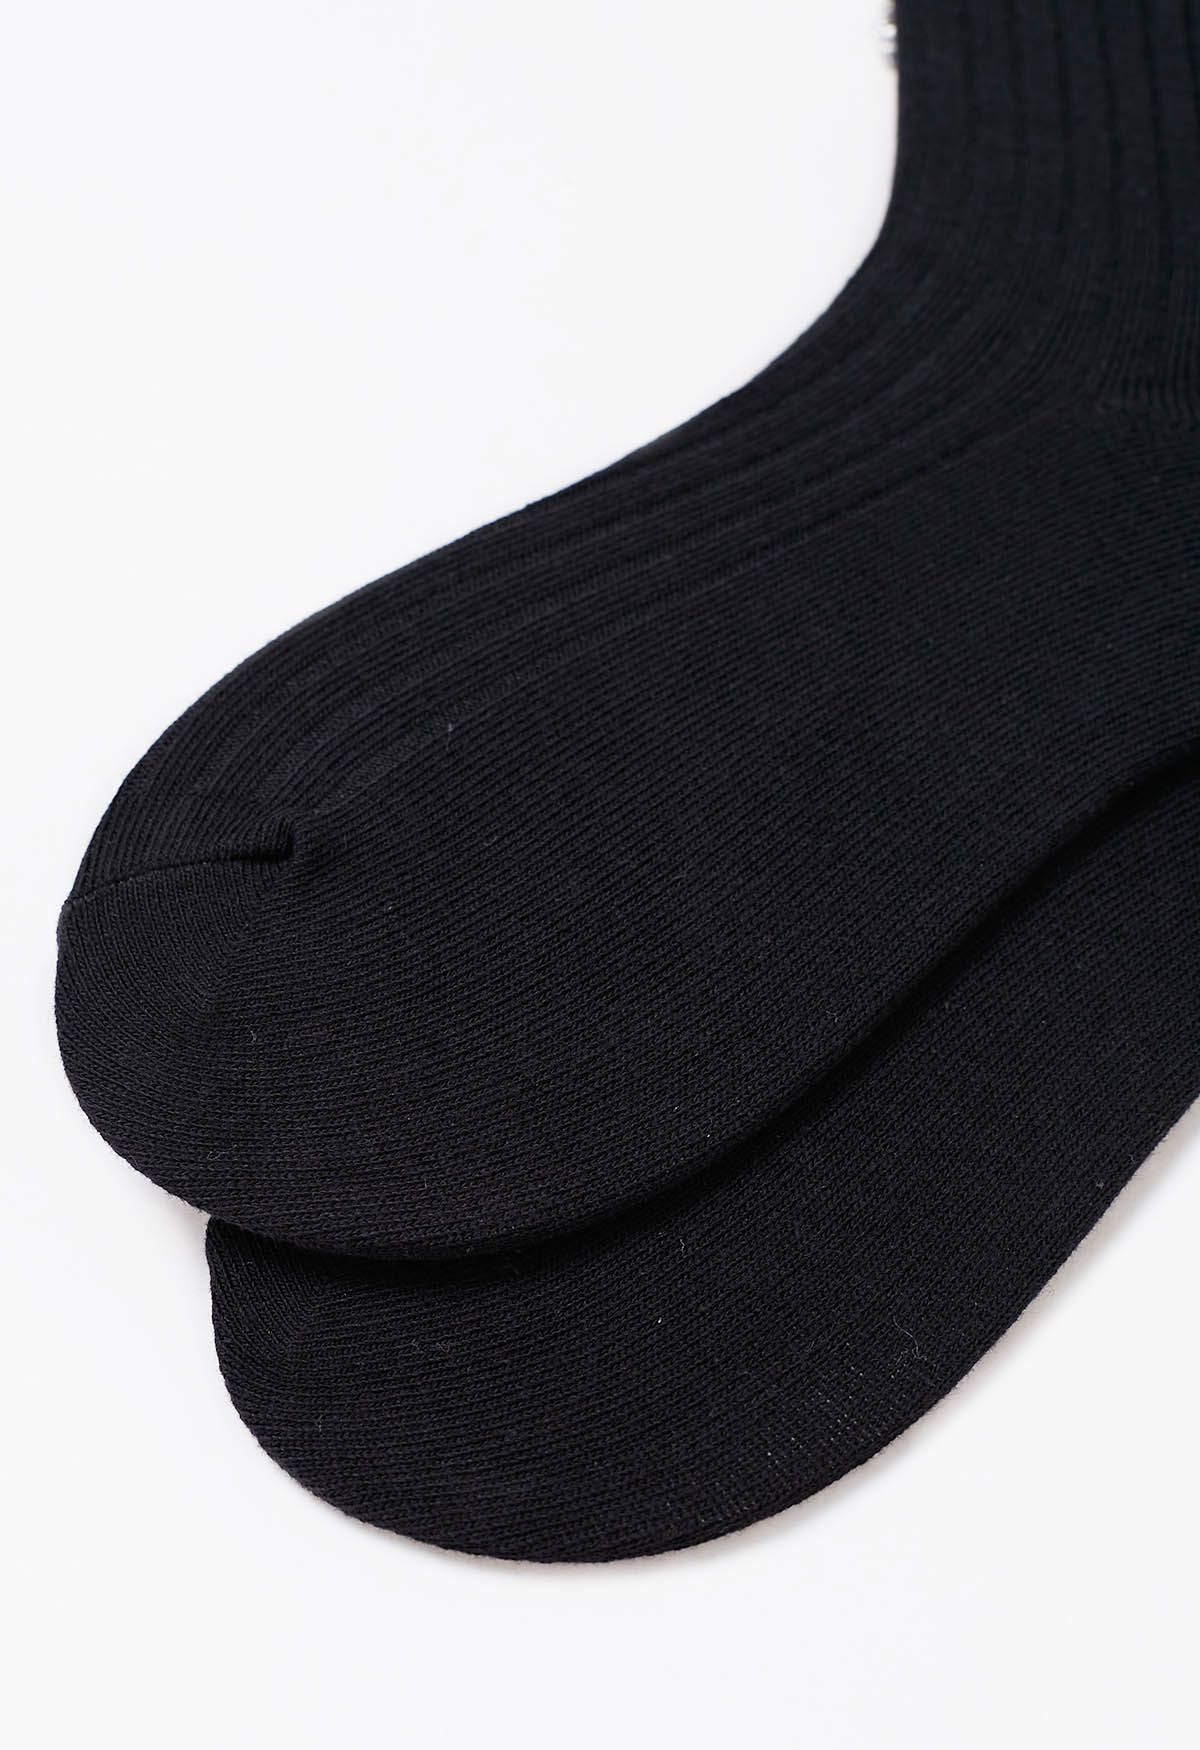 Rhinestone Hollow Out Heart Cotton Socks in Black